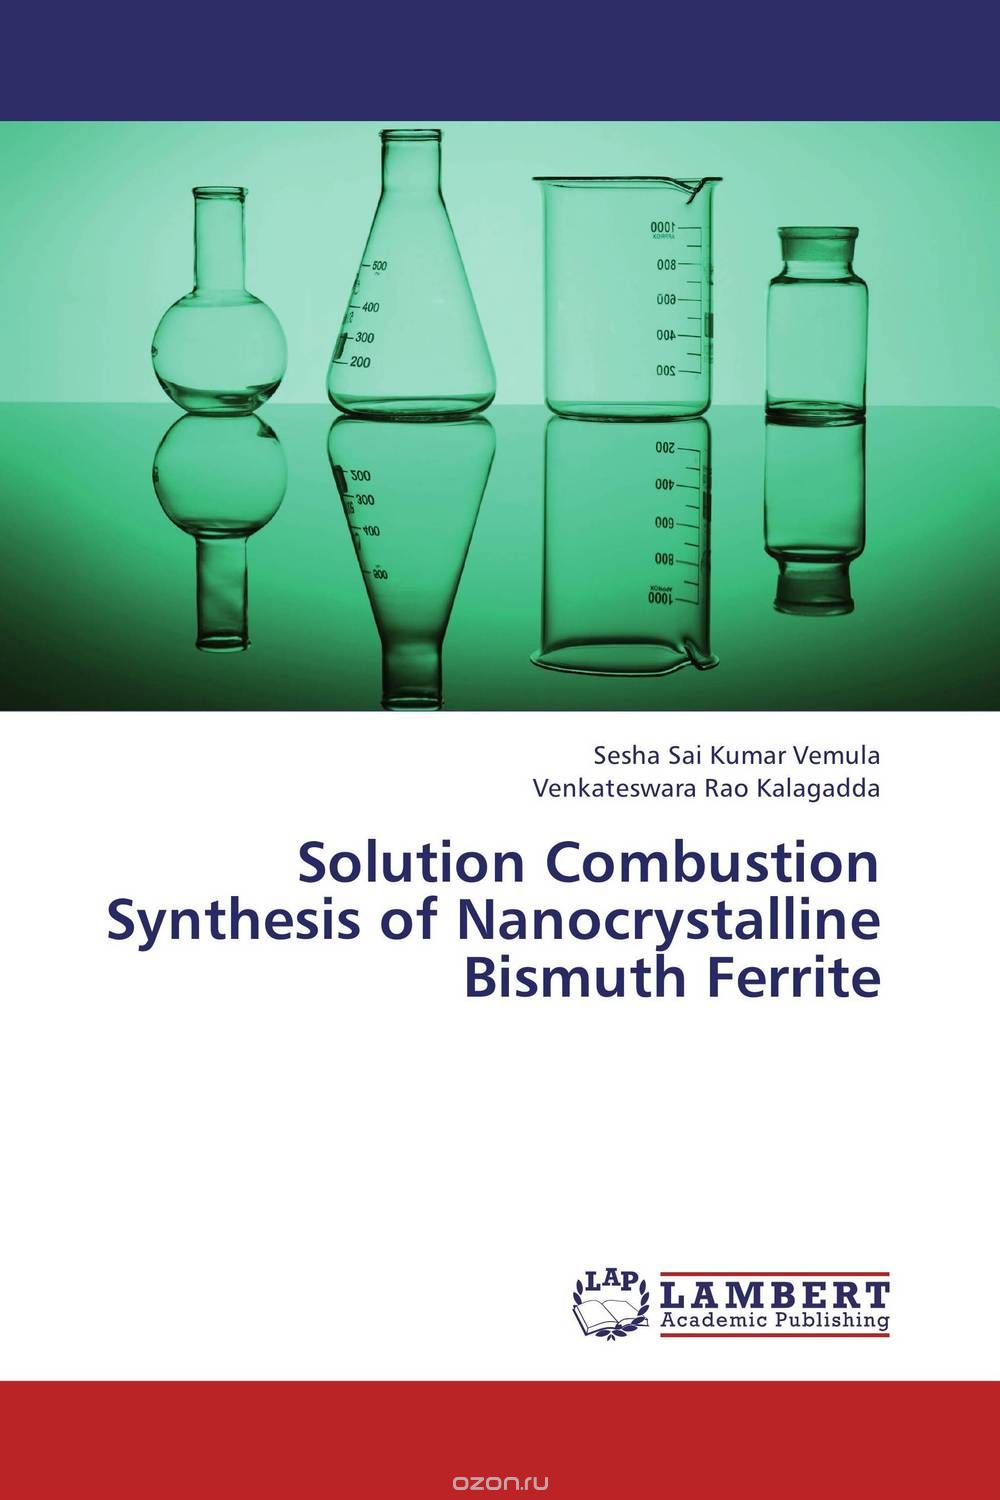 Скачать книгу "Solution Combustion Synthesis of Nanocrystalline Bismuth Ferrite"